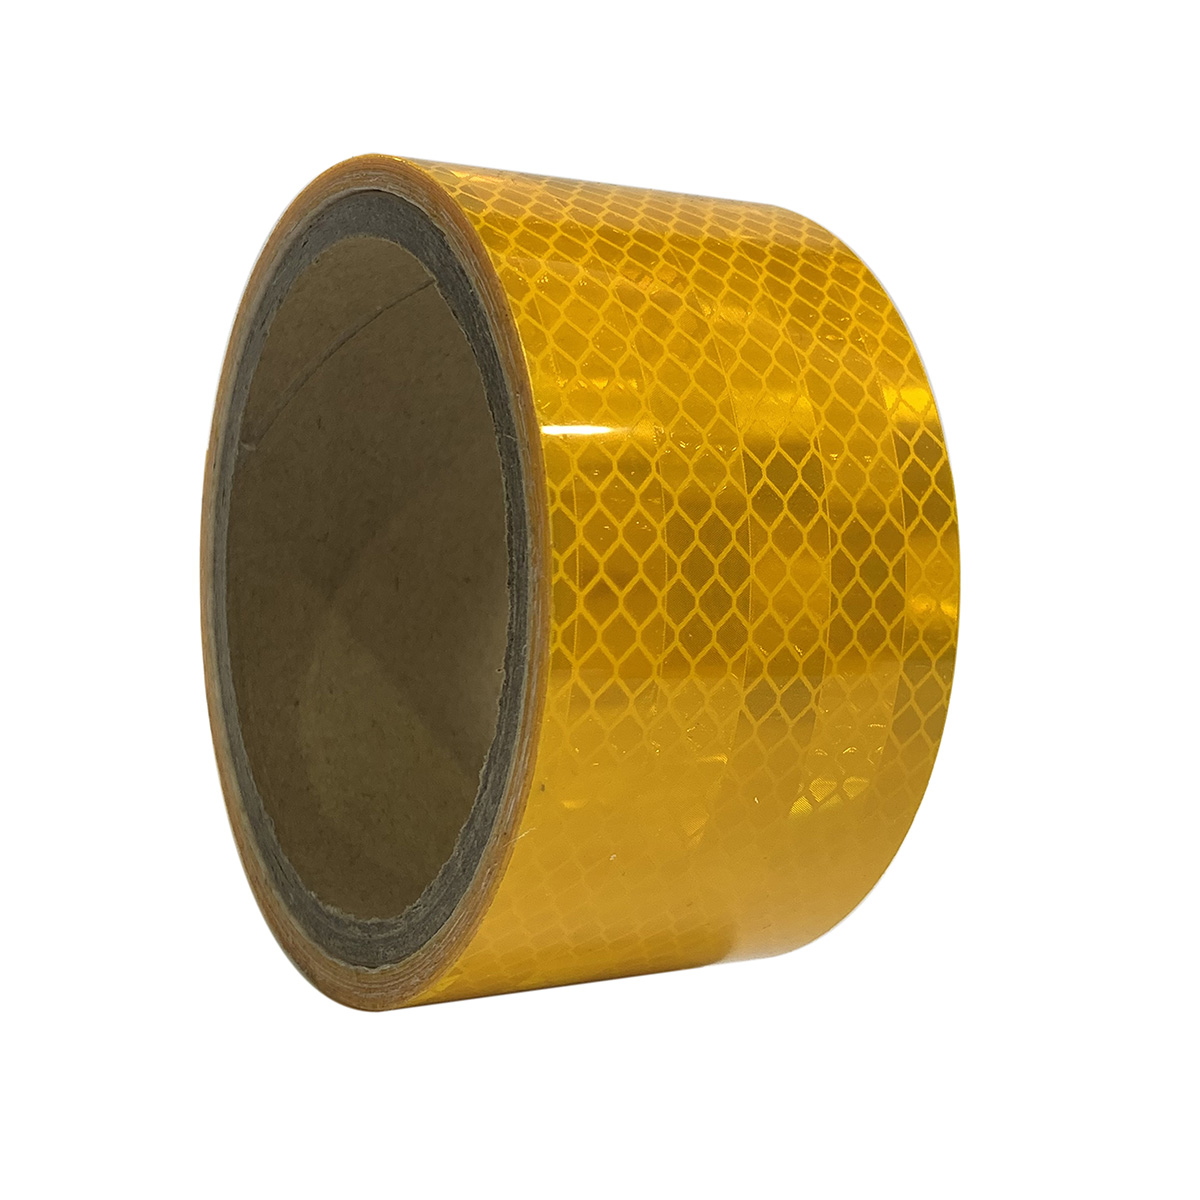 5cm*5m Golden Yellow Micro-Prismatic Reflective Tape